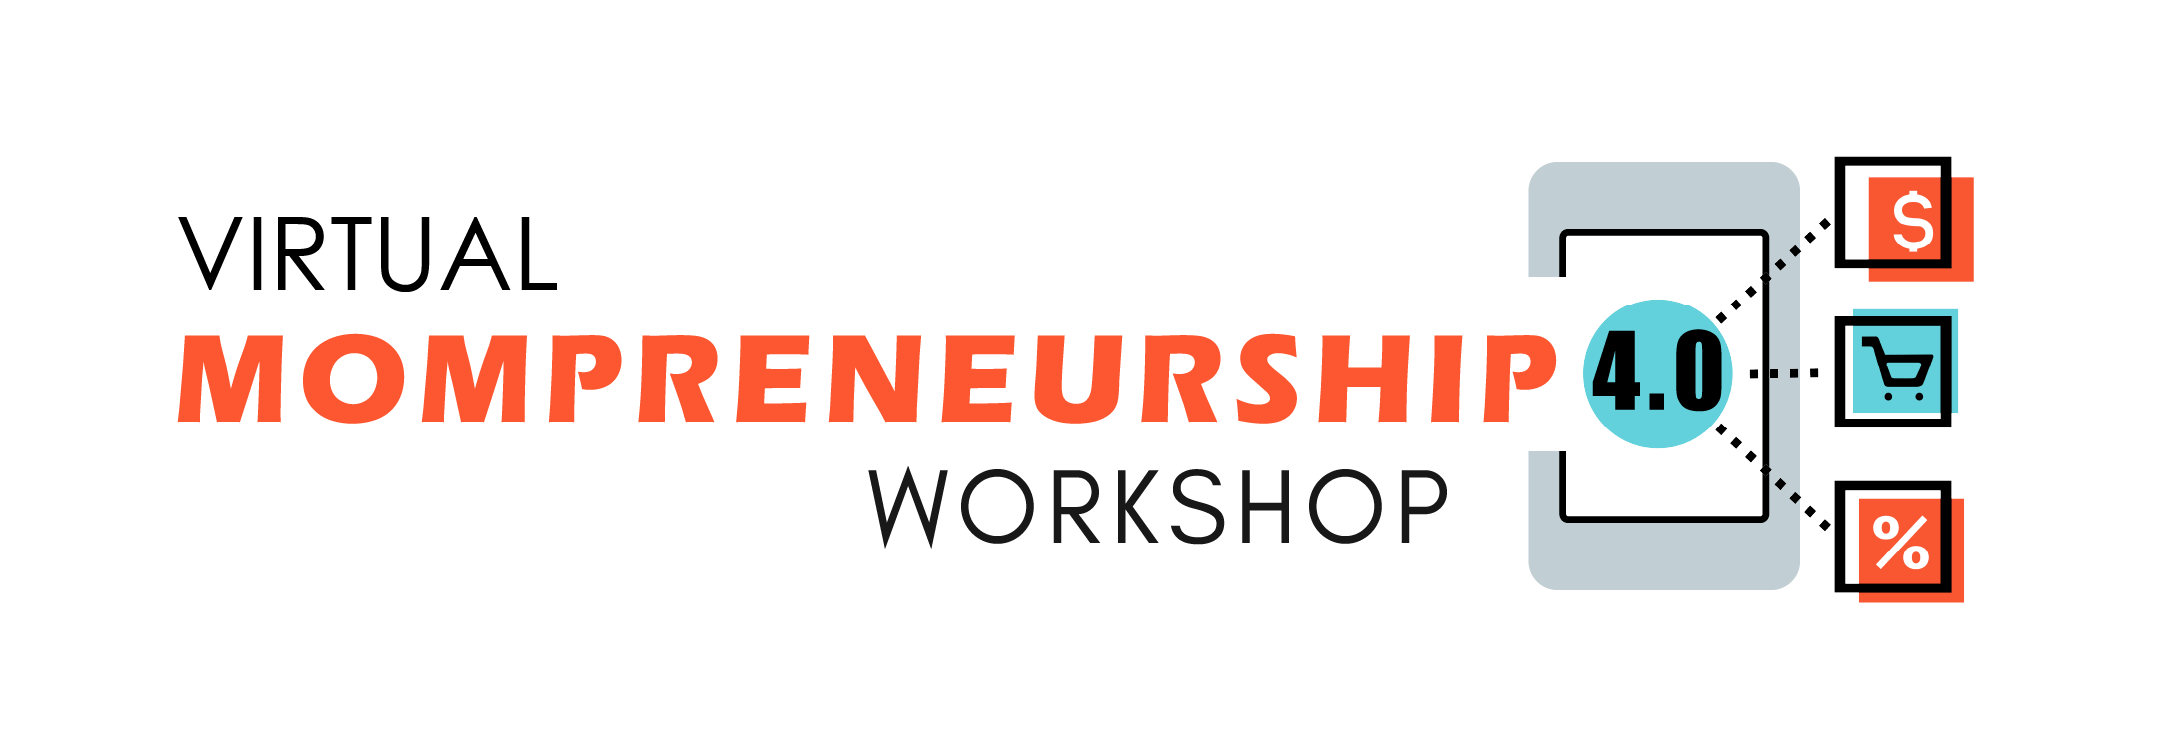 Mompreneurship 4.0 workshop logo